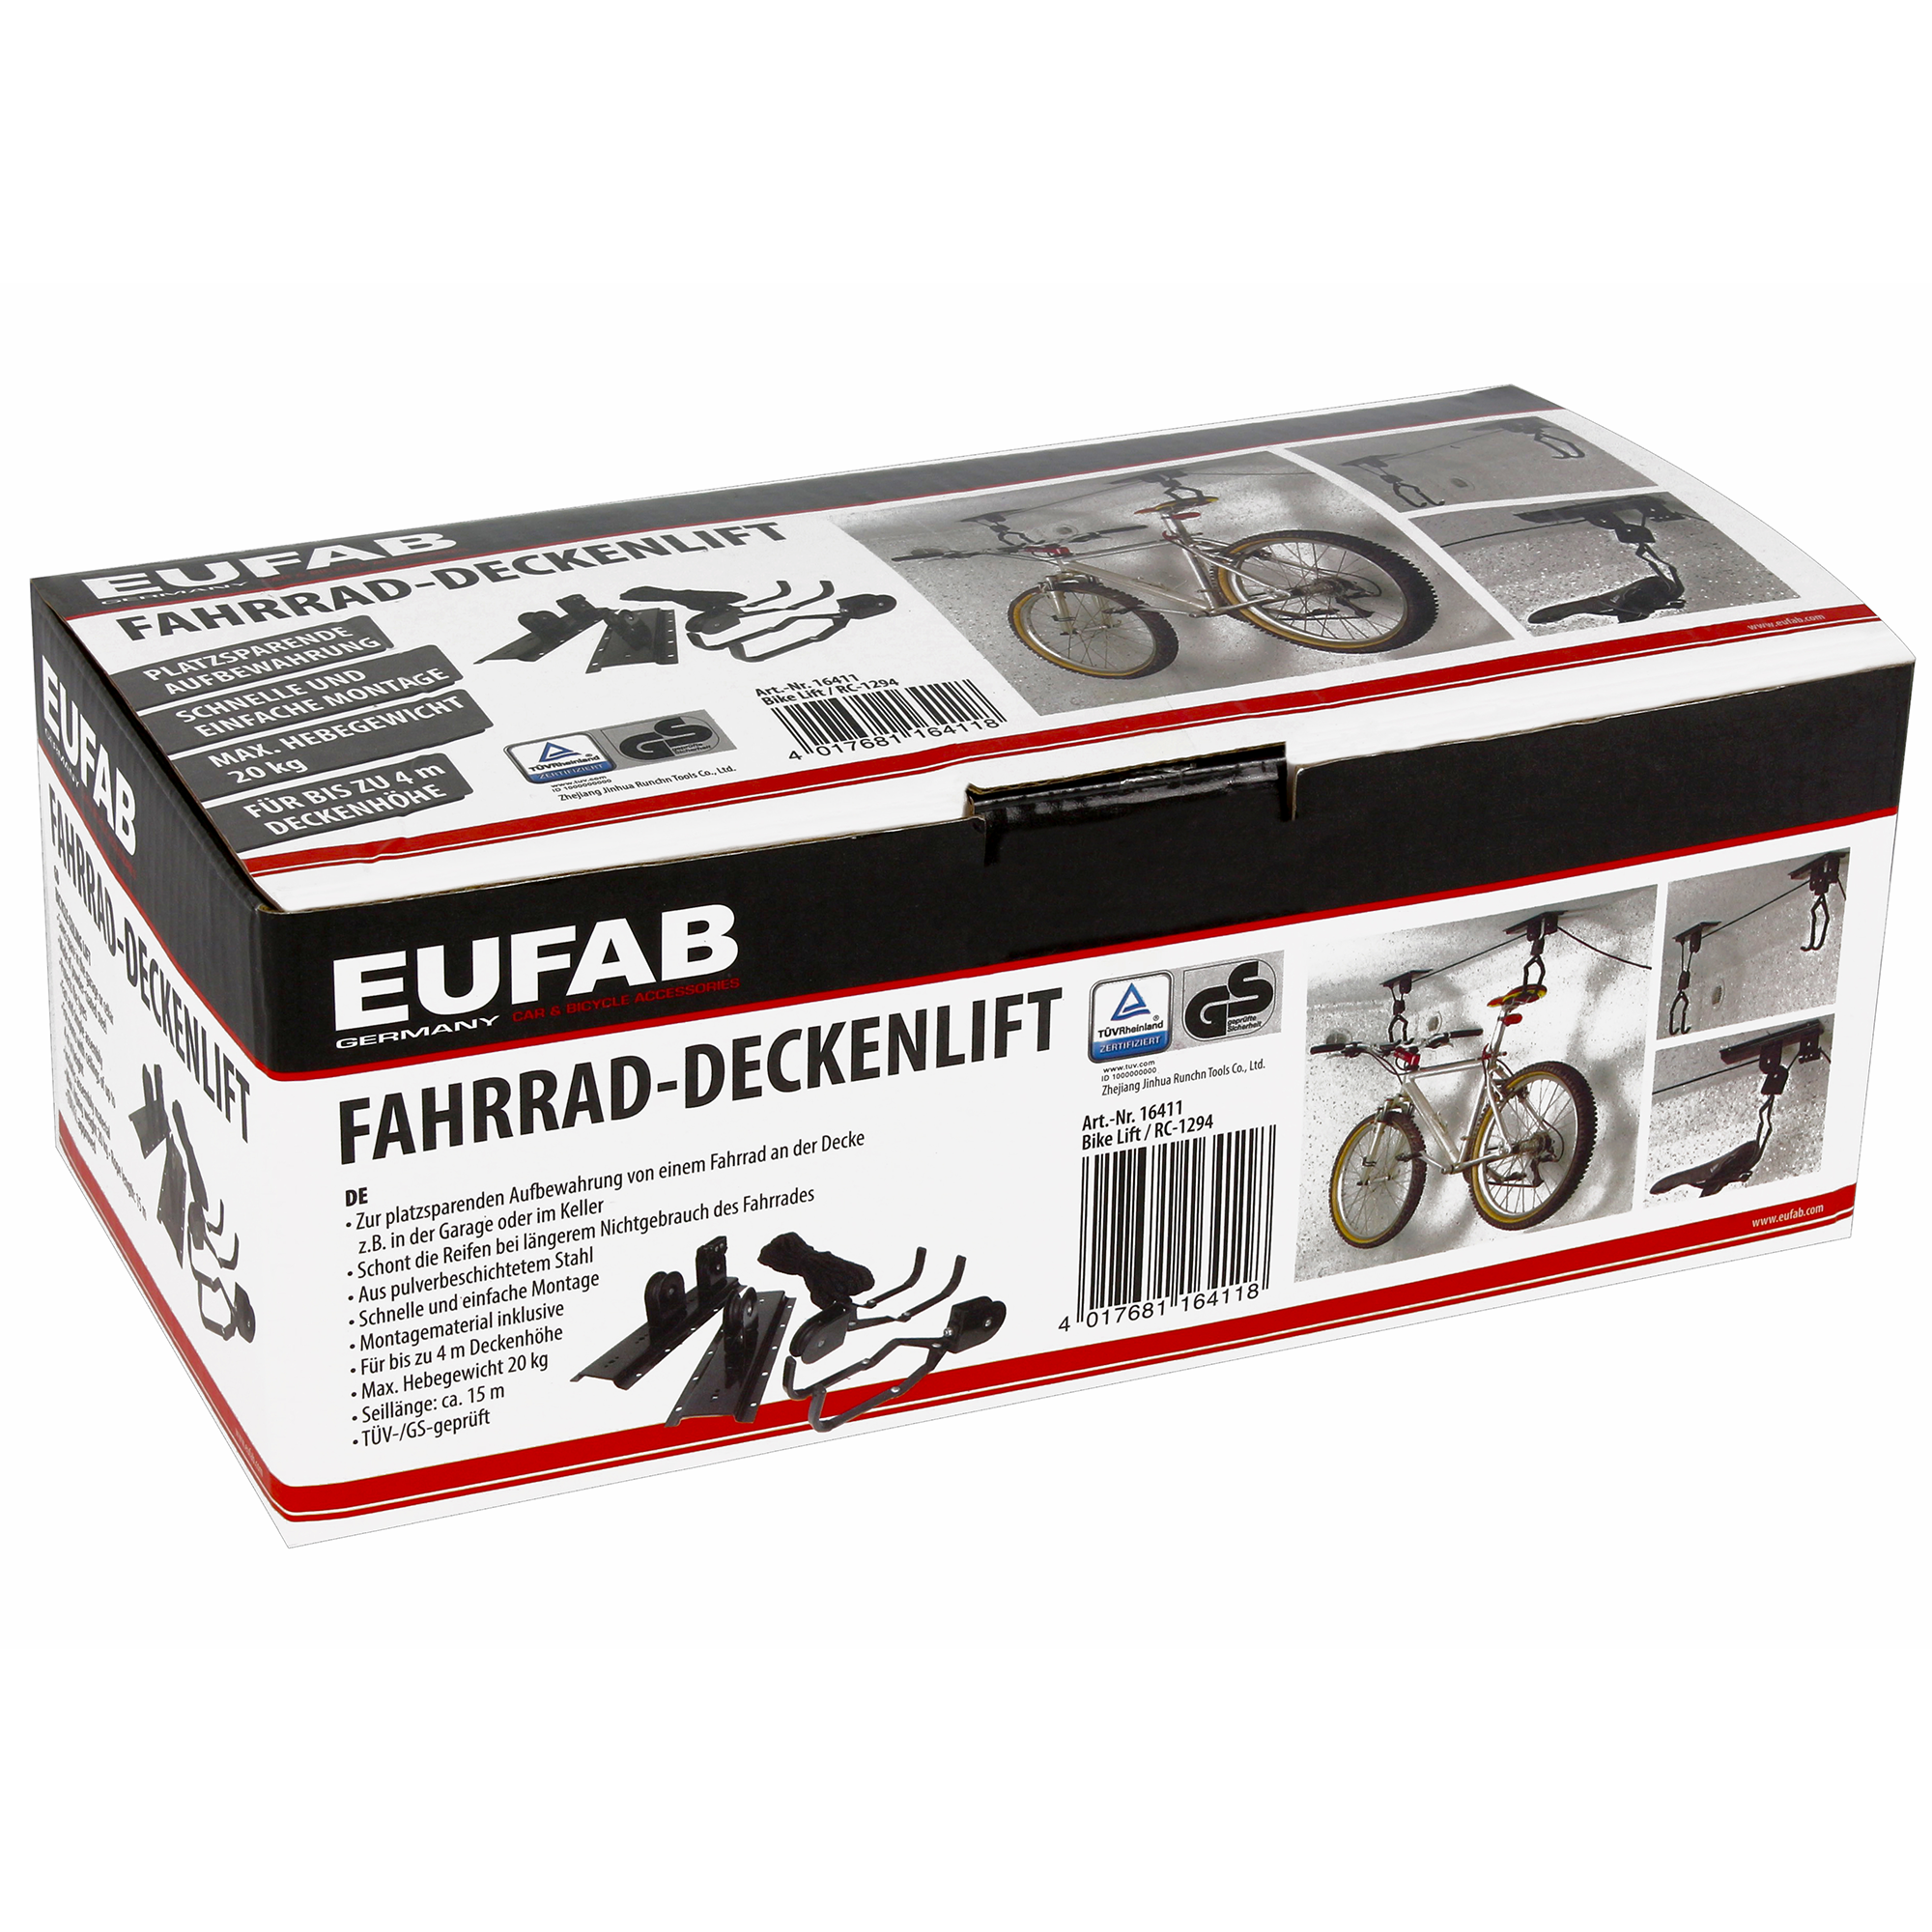 Fahrrad-Deckenlift + product picture